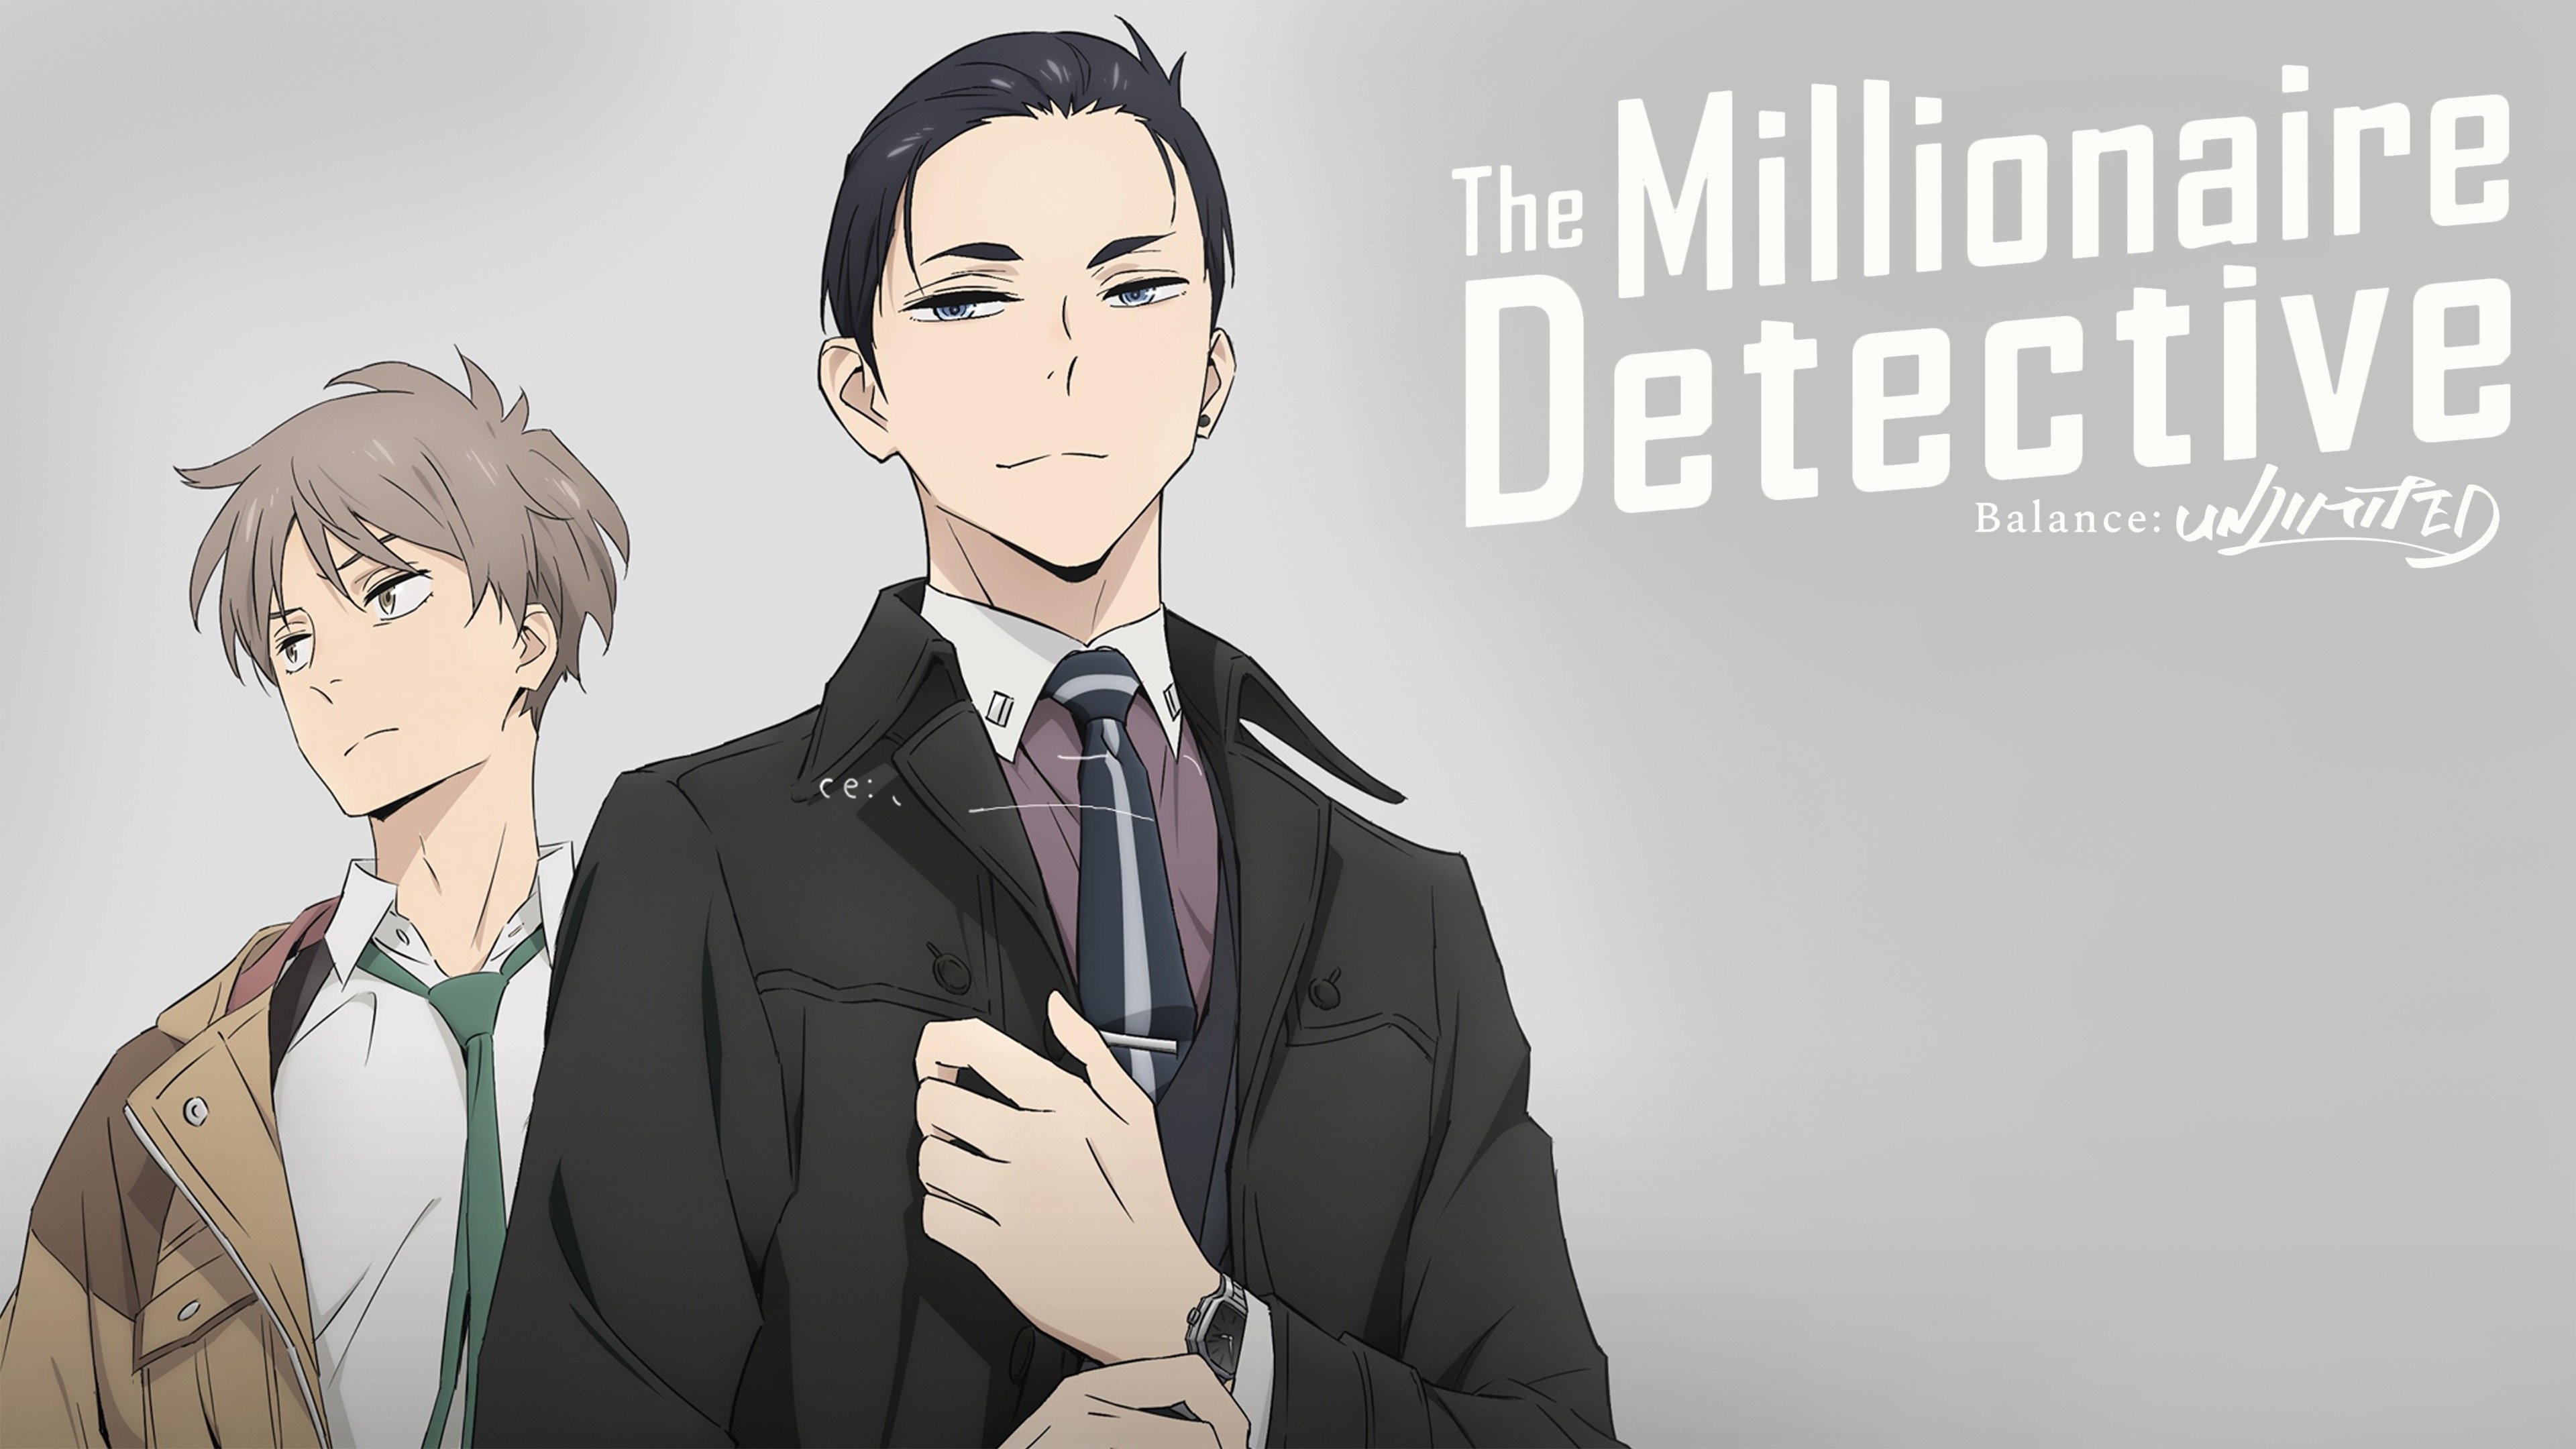 The Millionaire Detective - Balance: Unlimited